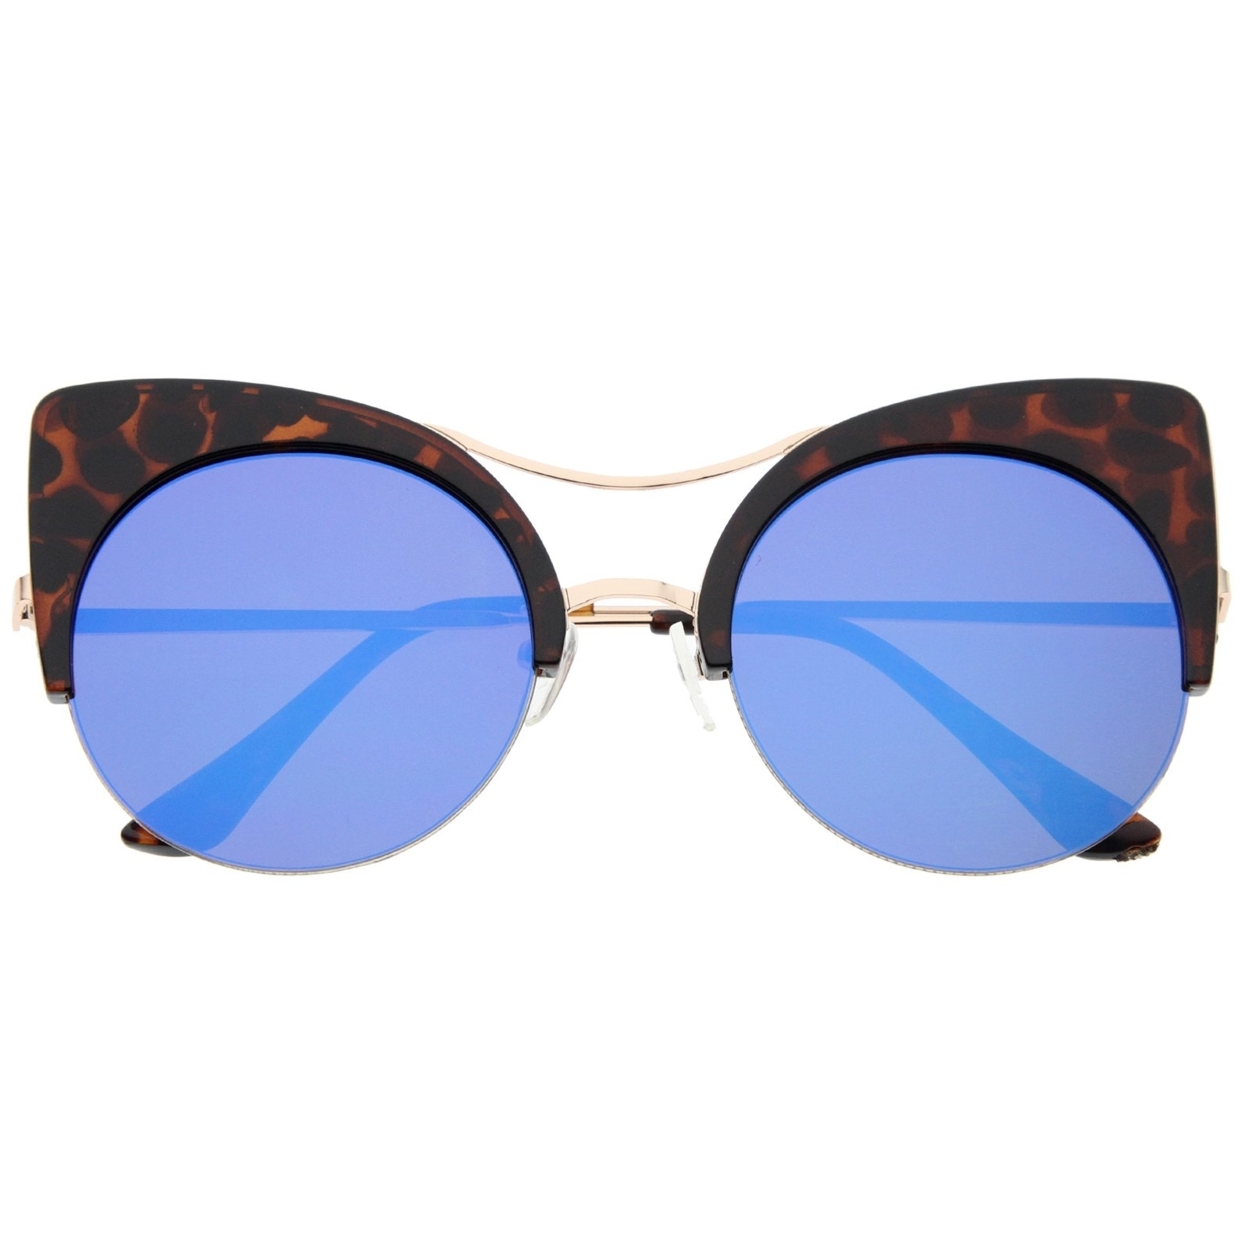 Womens Oversized Half Frame Semi-Rimless Flat Lens Round Cat Eye Sunglasses 60mm - Tortoise-Gold / Ice